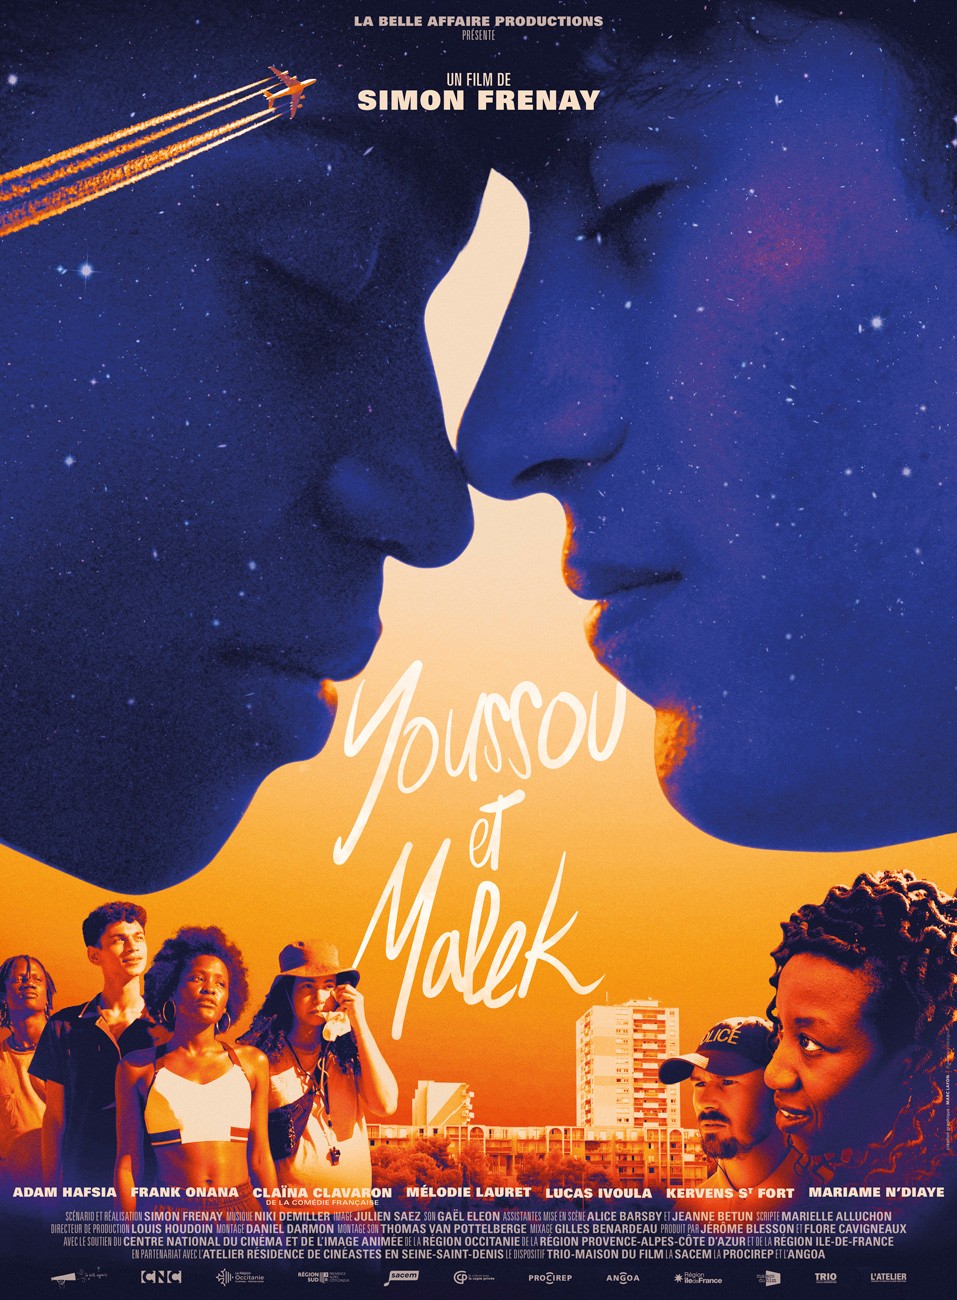 Extra Large Movie Poster Image for Youssou et Malek